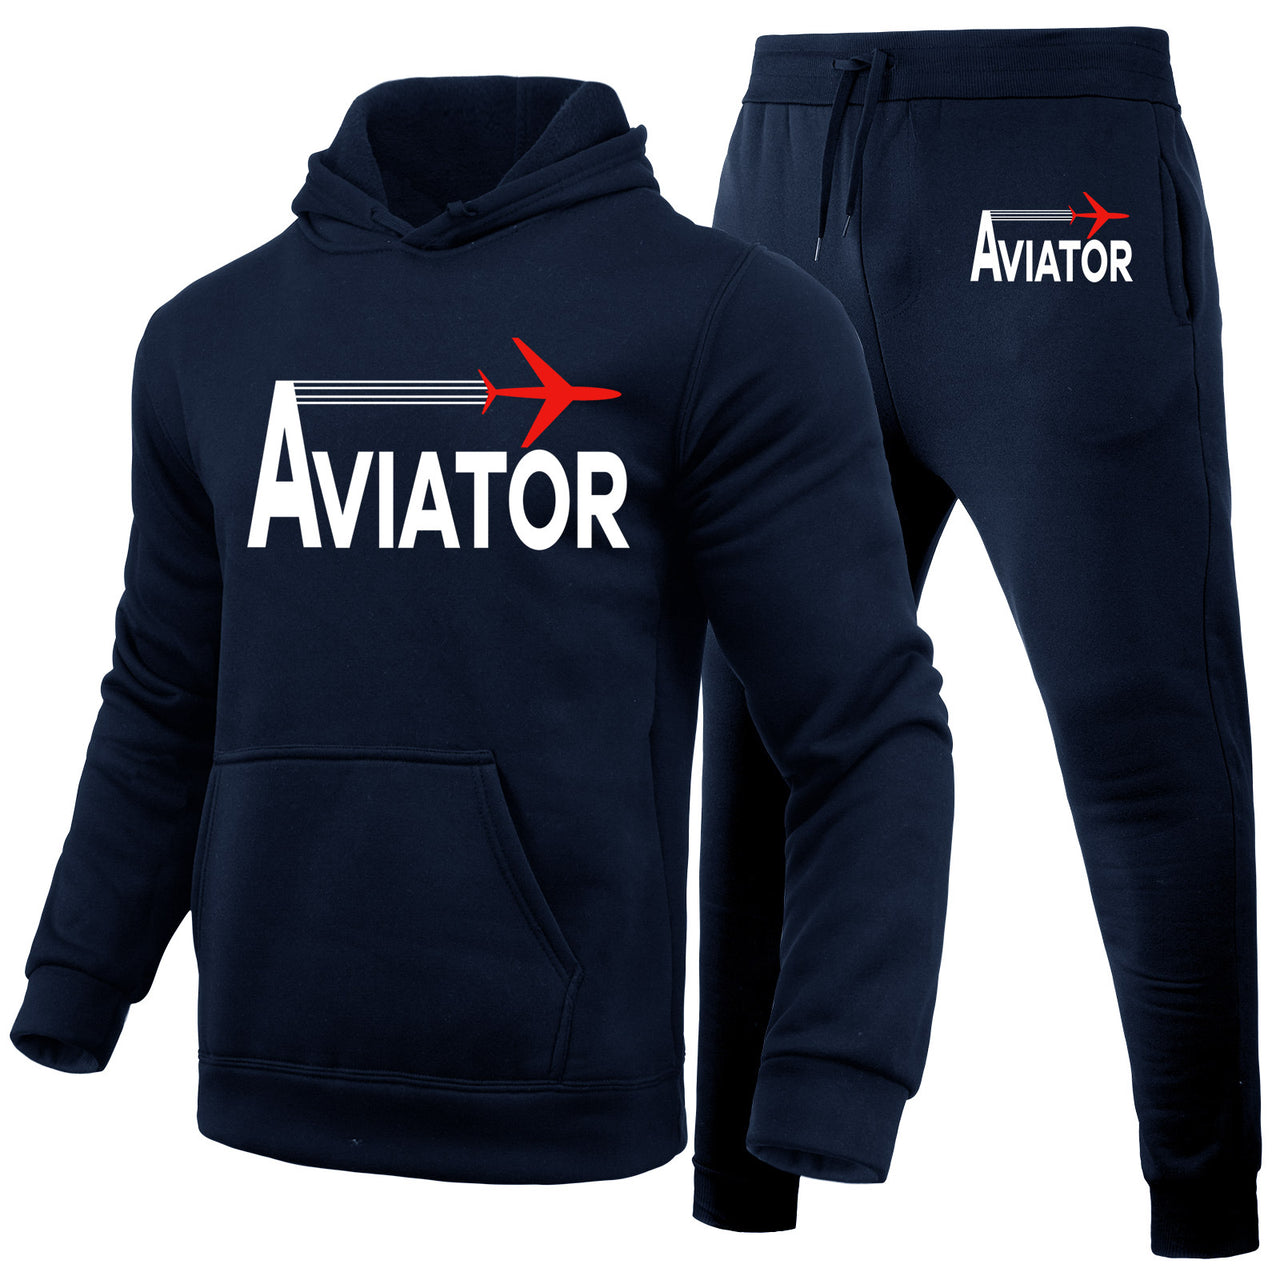 Aviator Designed Hoodies & Sweatpants Set